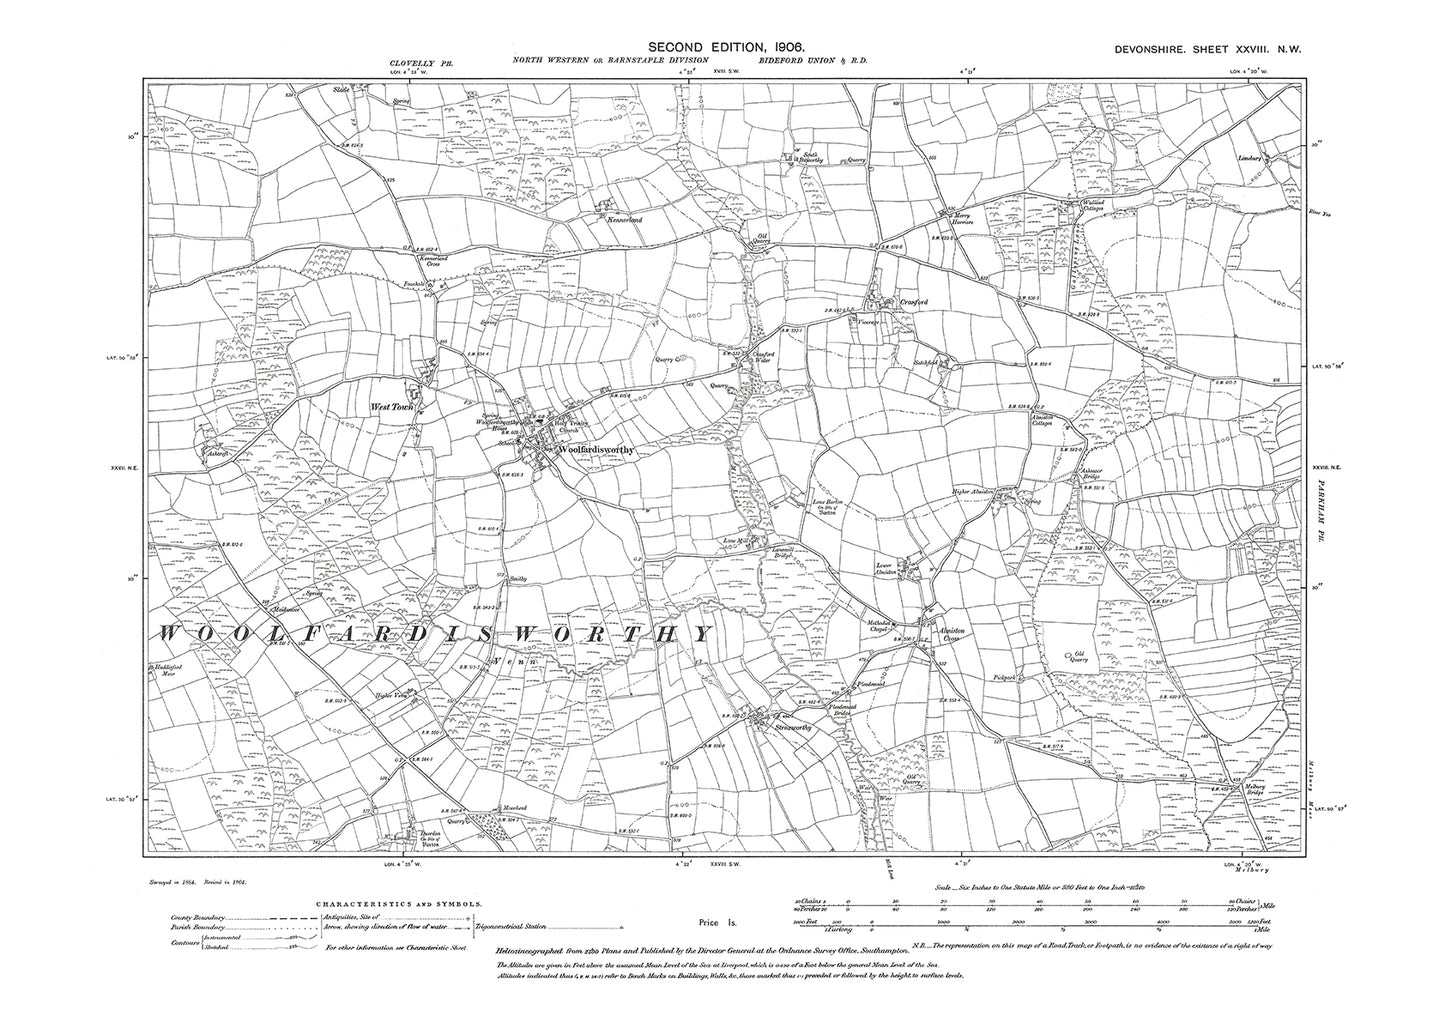 Woolfardisworthy, Old Map Devon 1906: 28NW